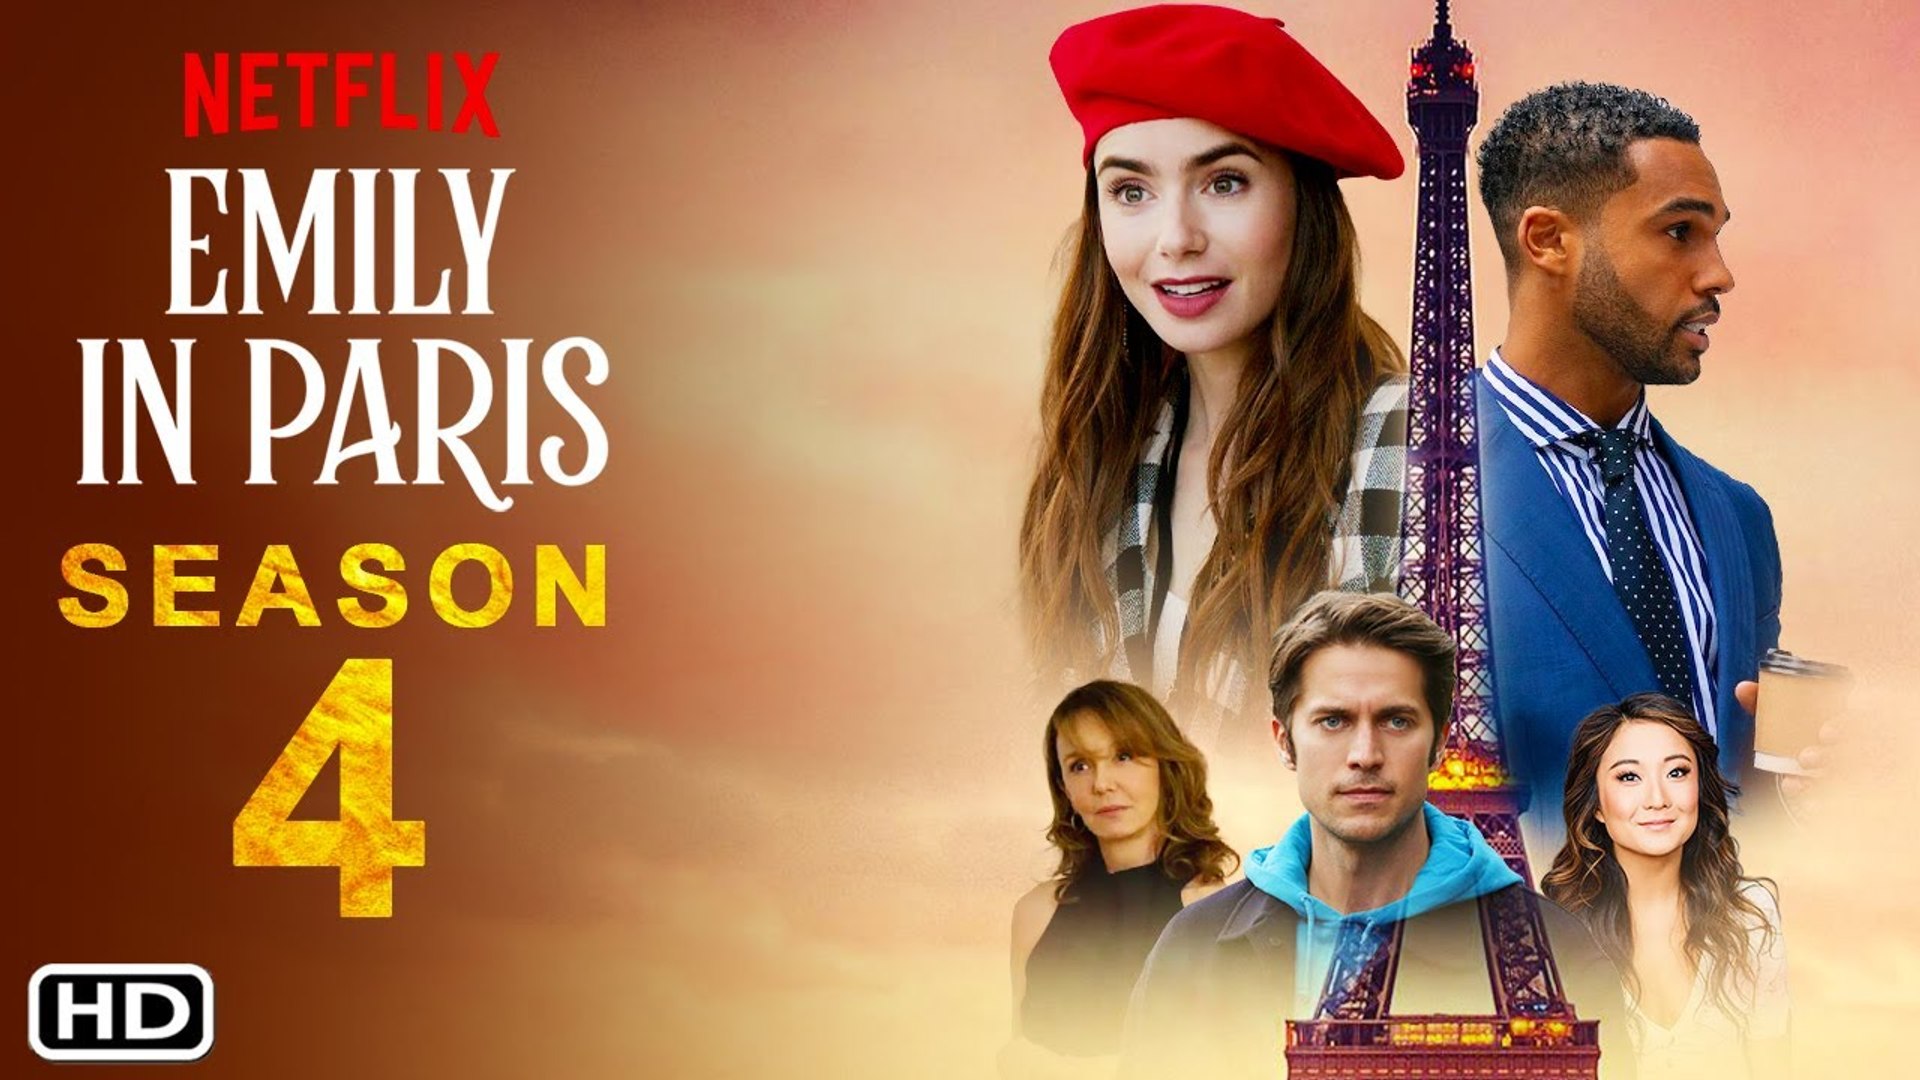 Emily in Paris season 2: Release date, cast, plot, and trailer